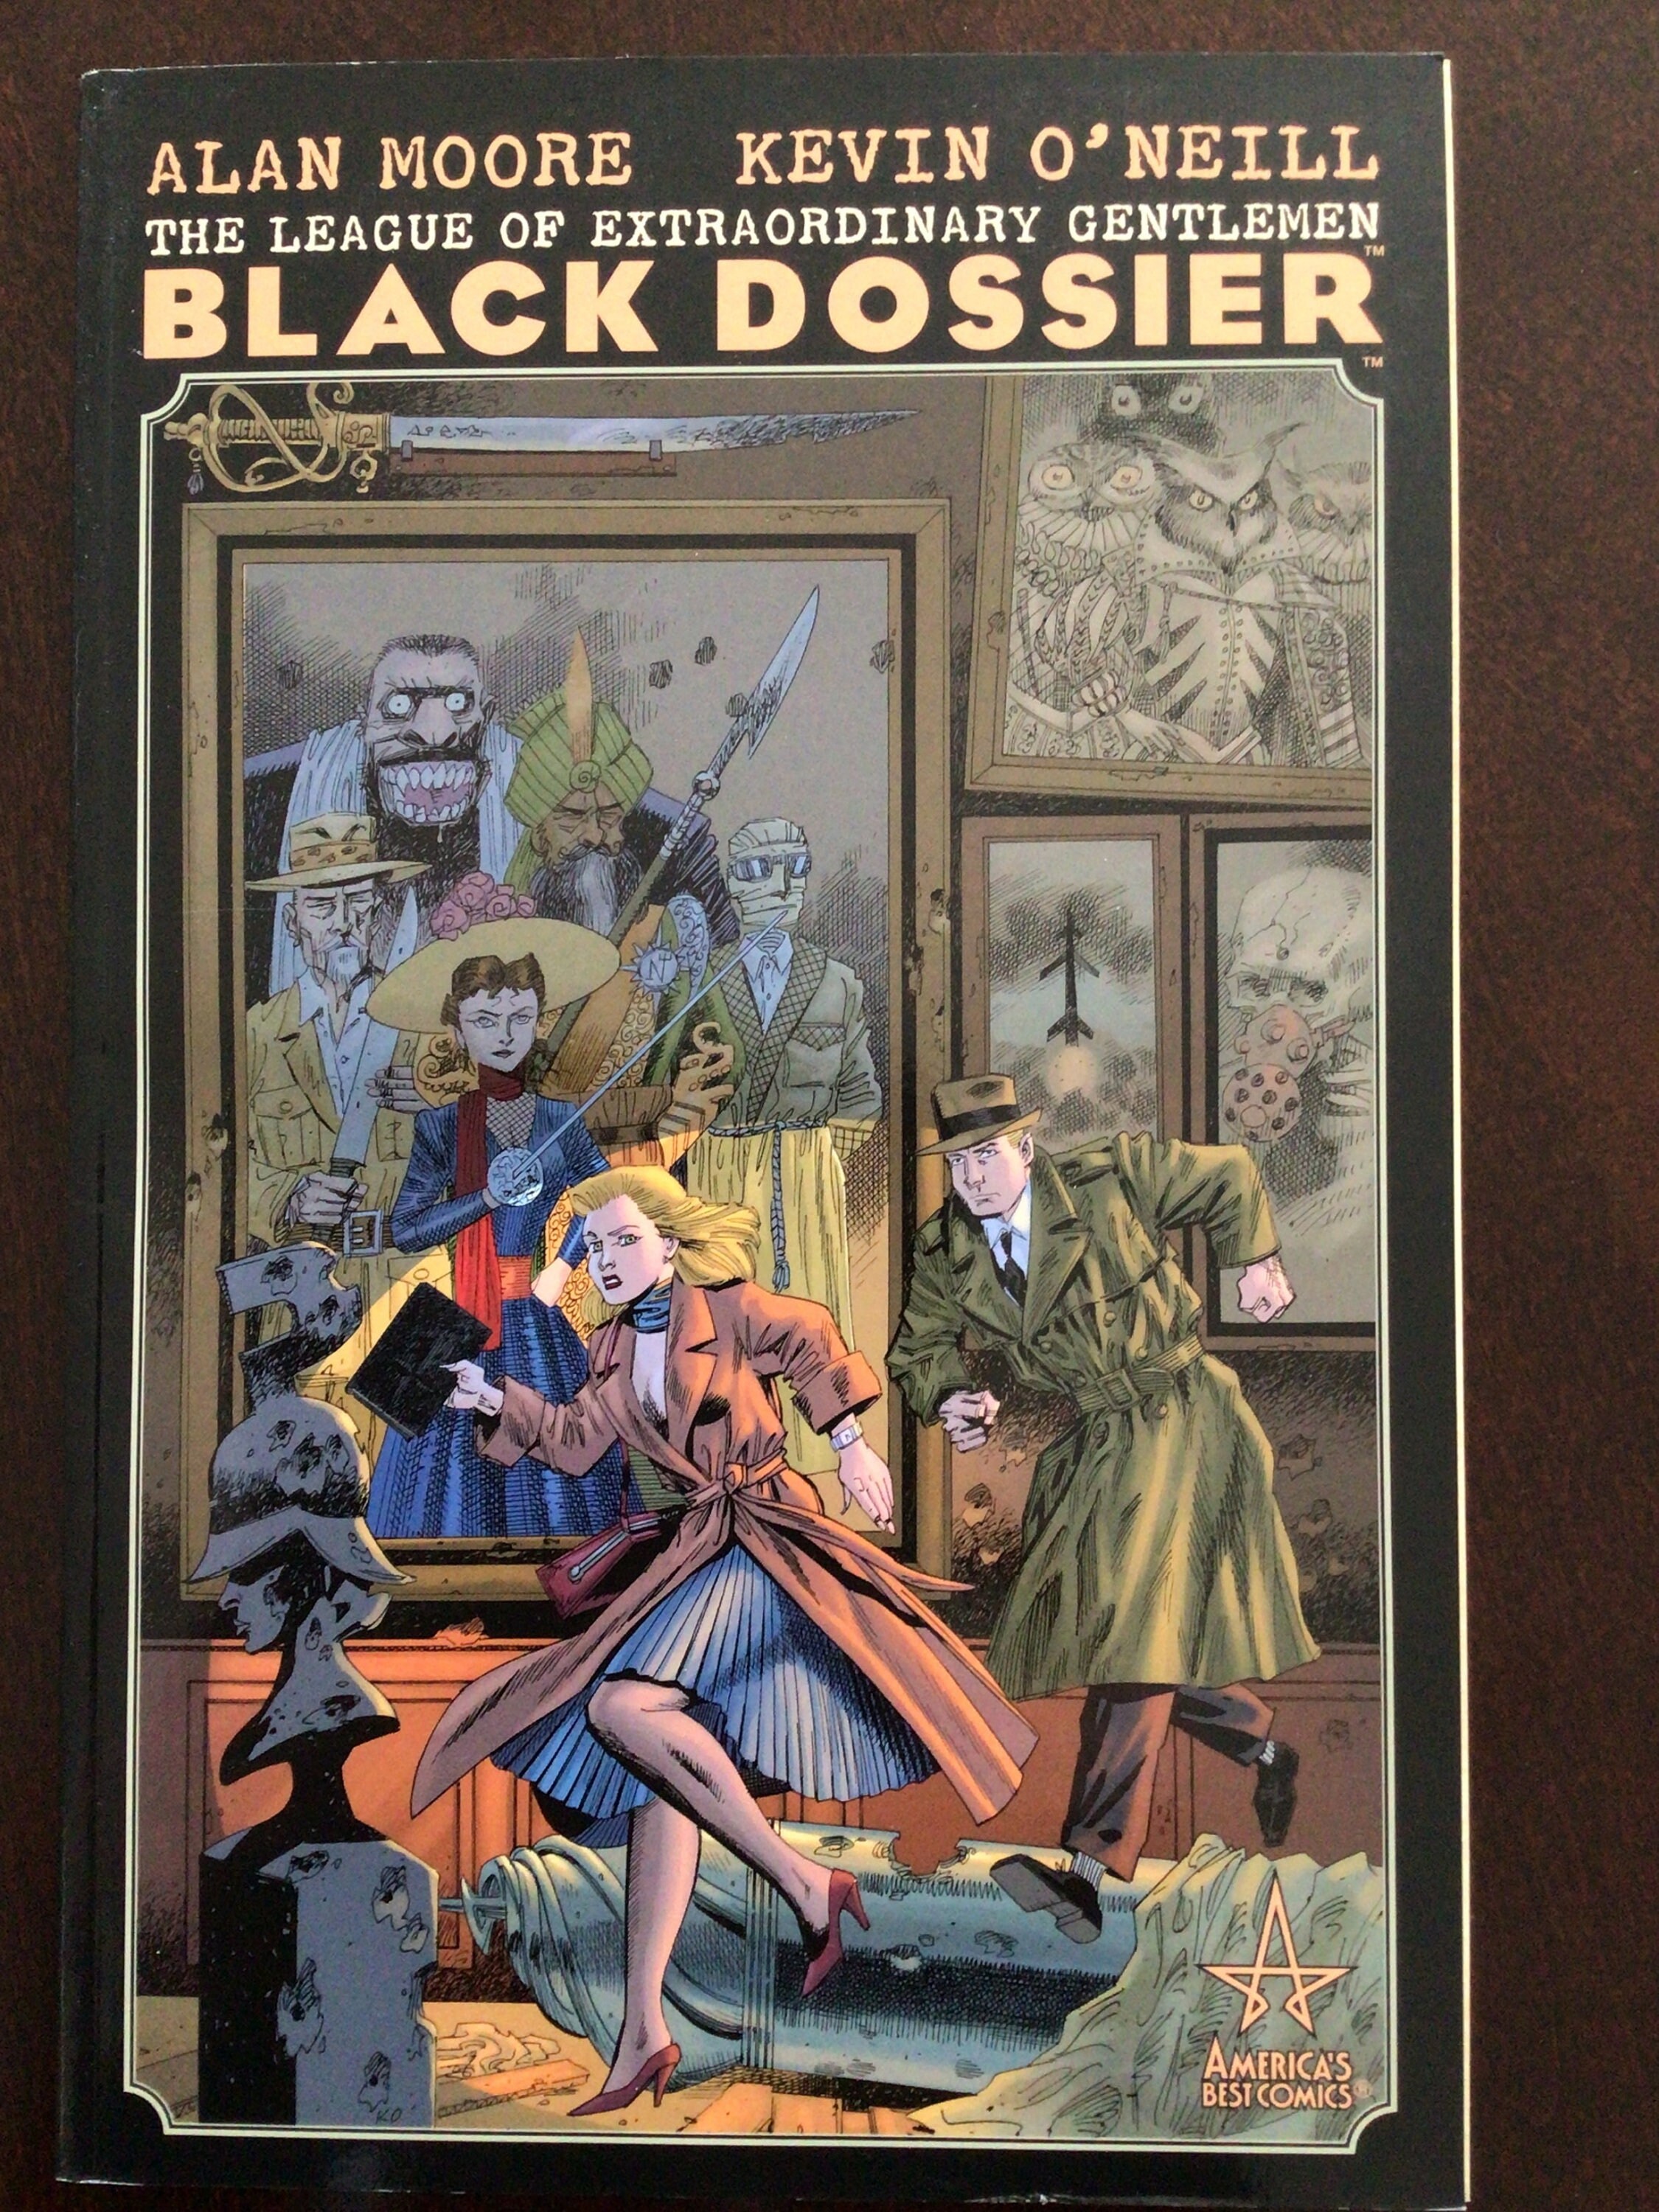 The black dossier